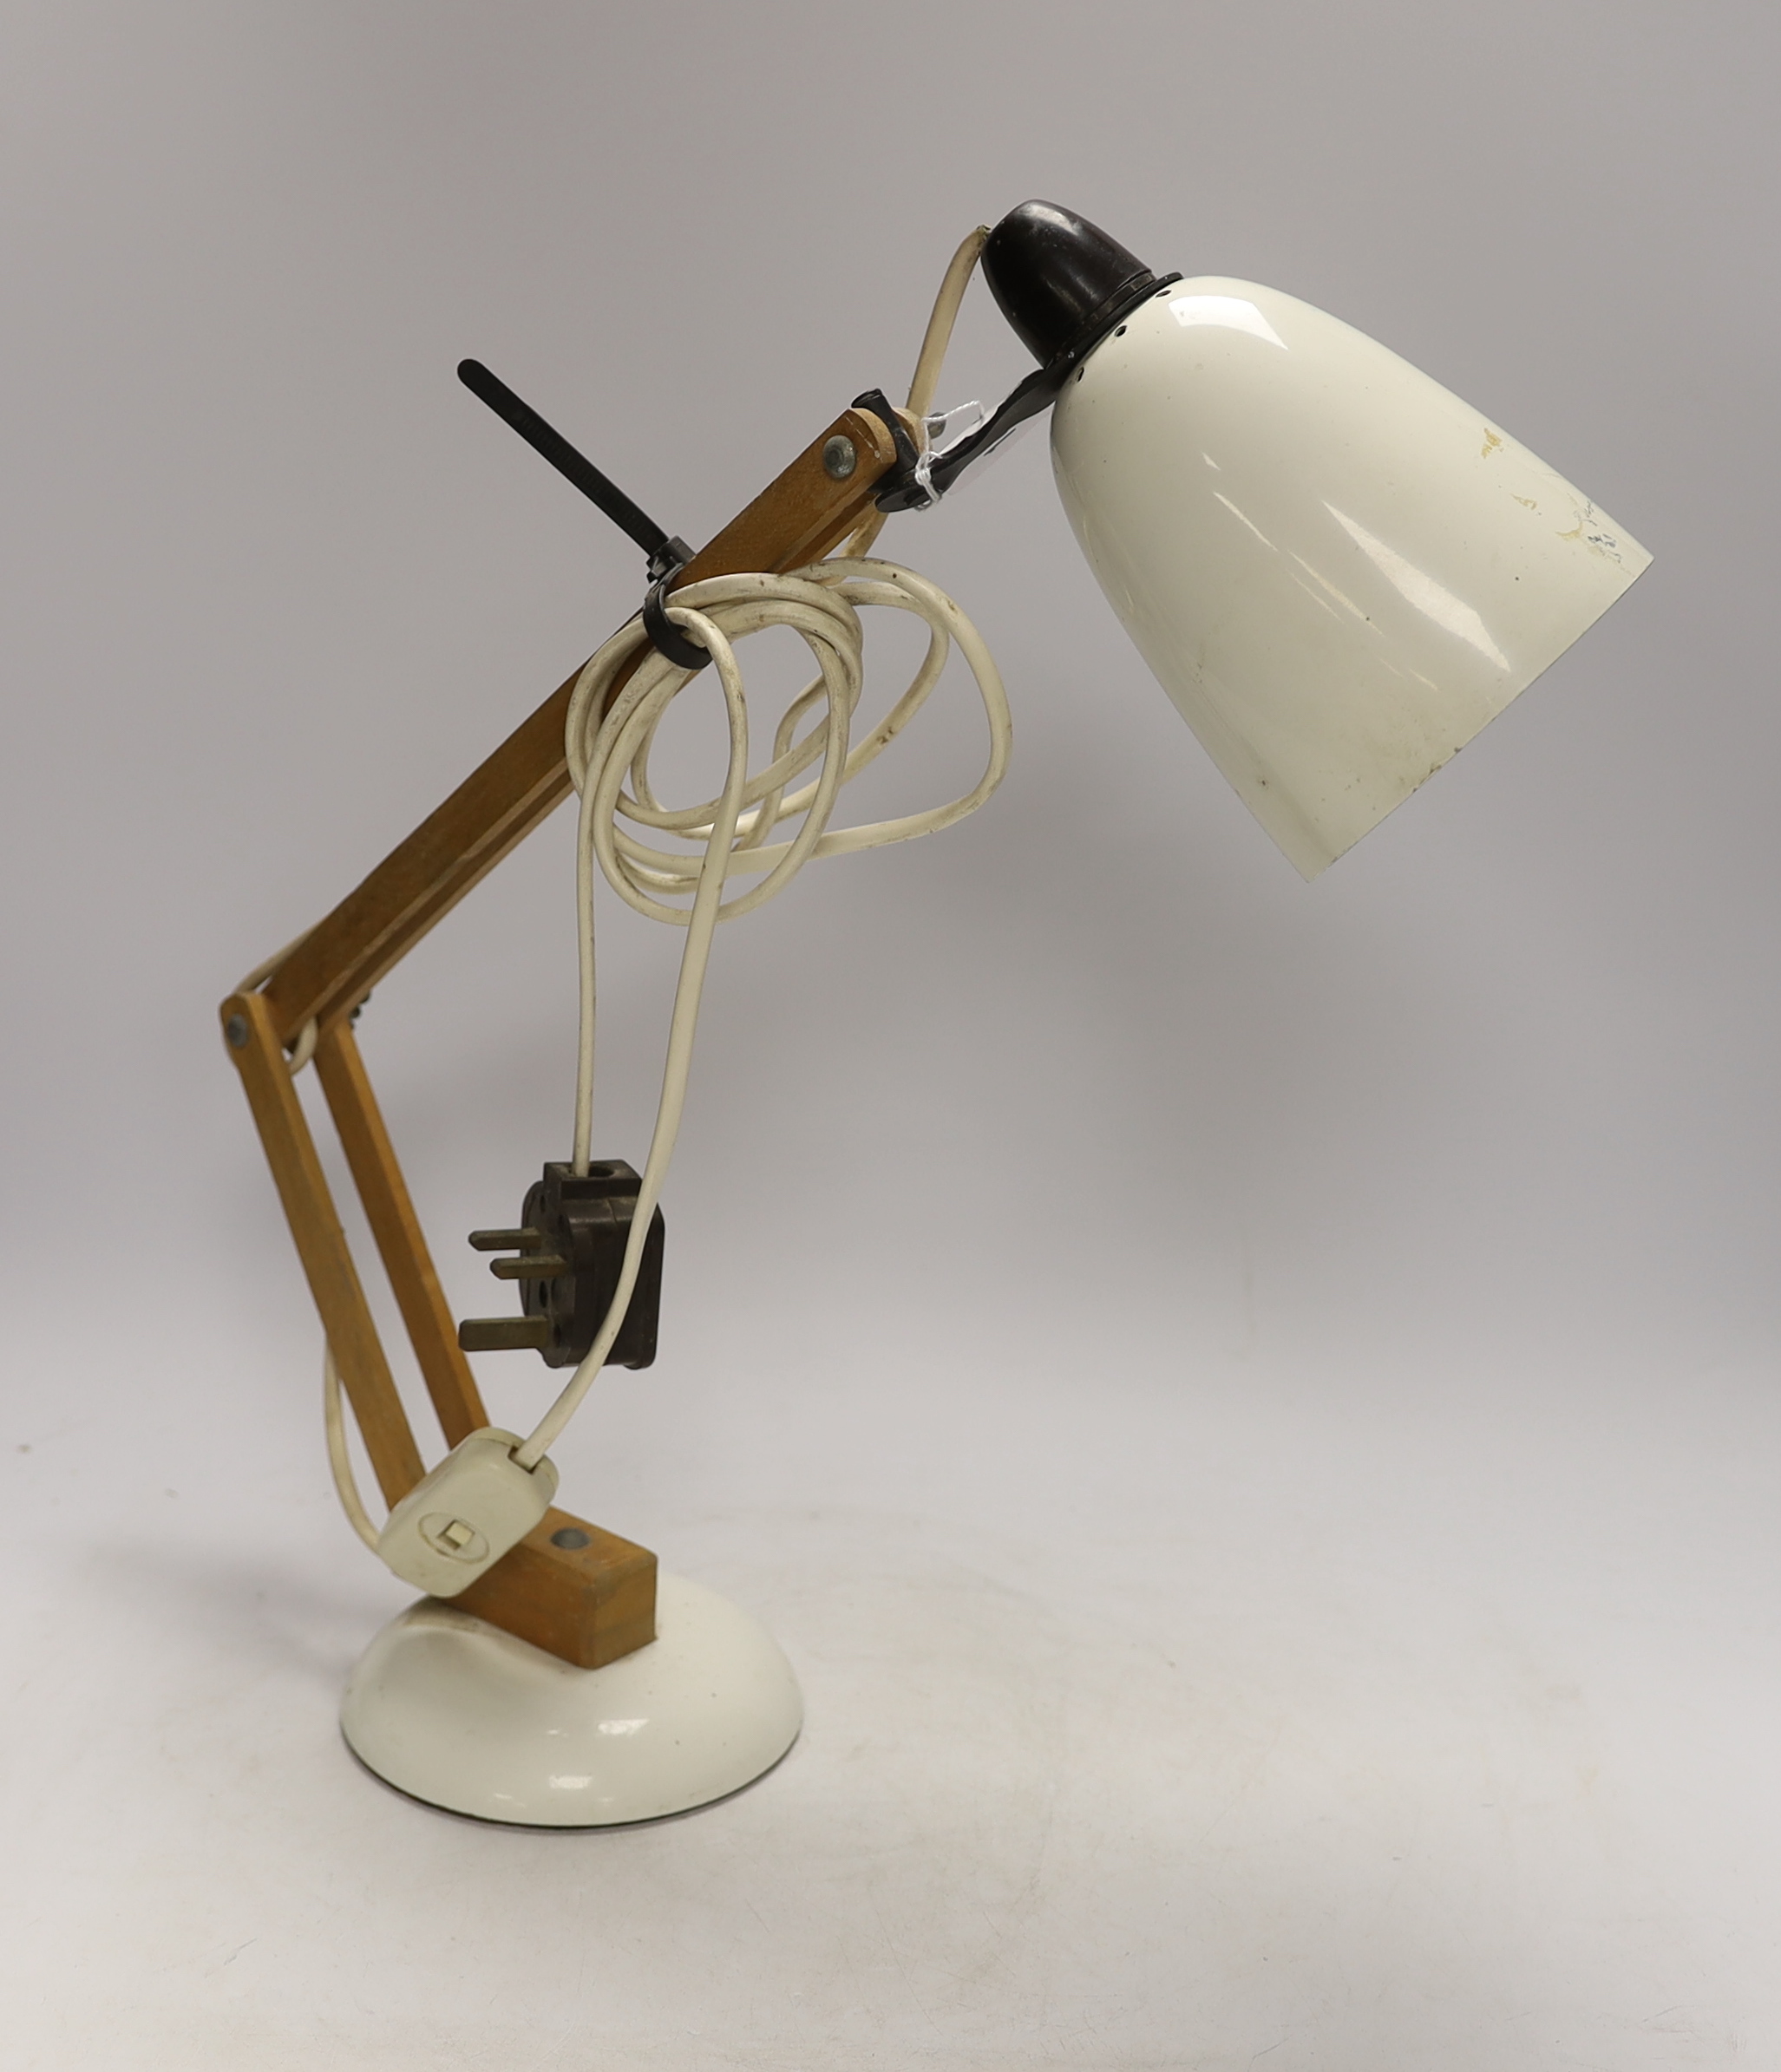 A Terence Conran Maclamp desk lamp, 43cm high